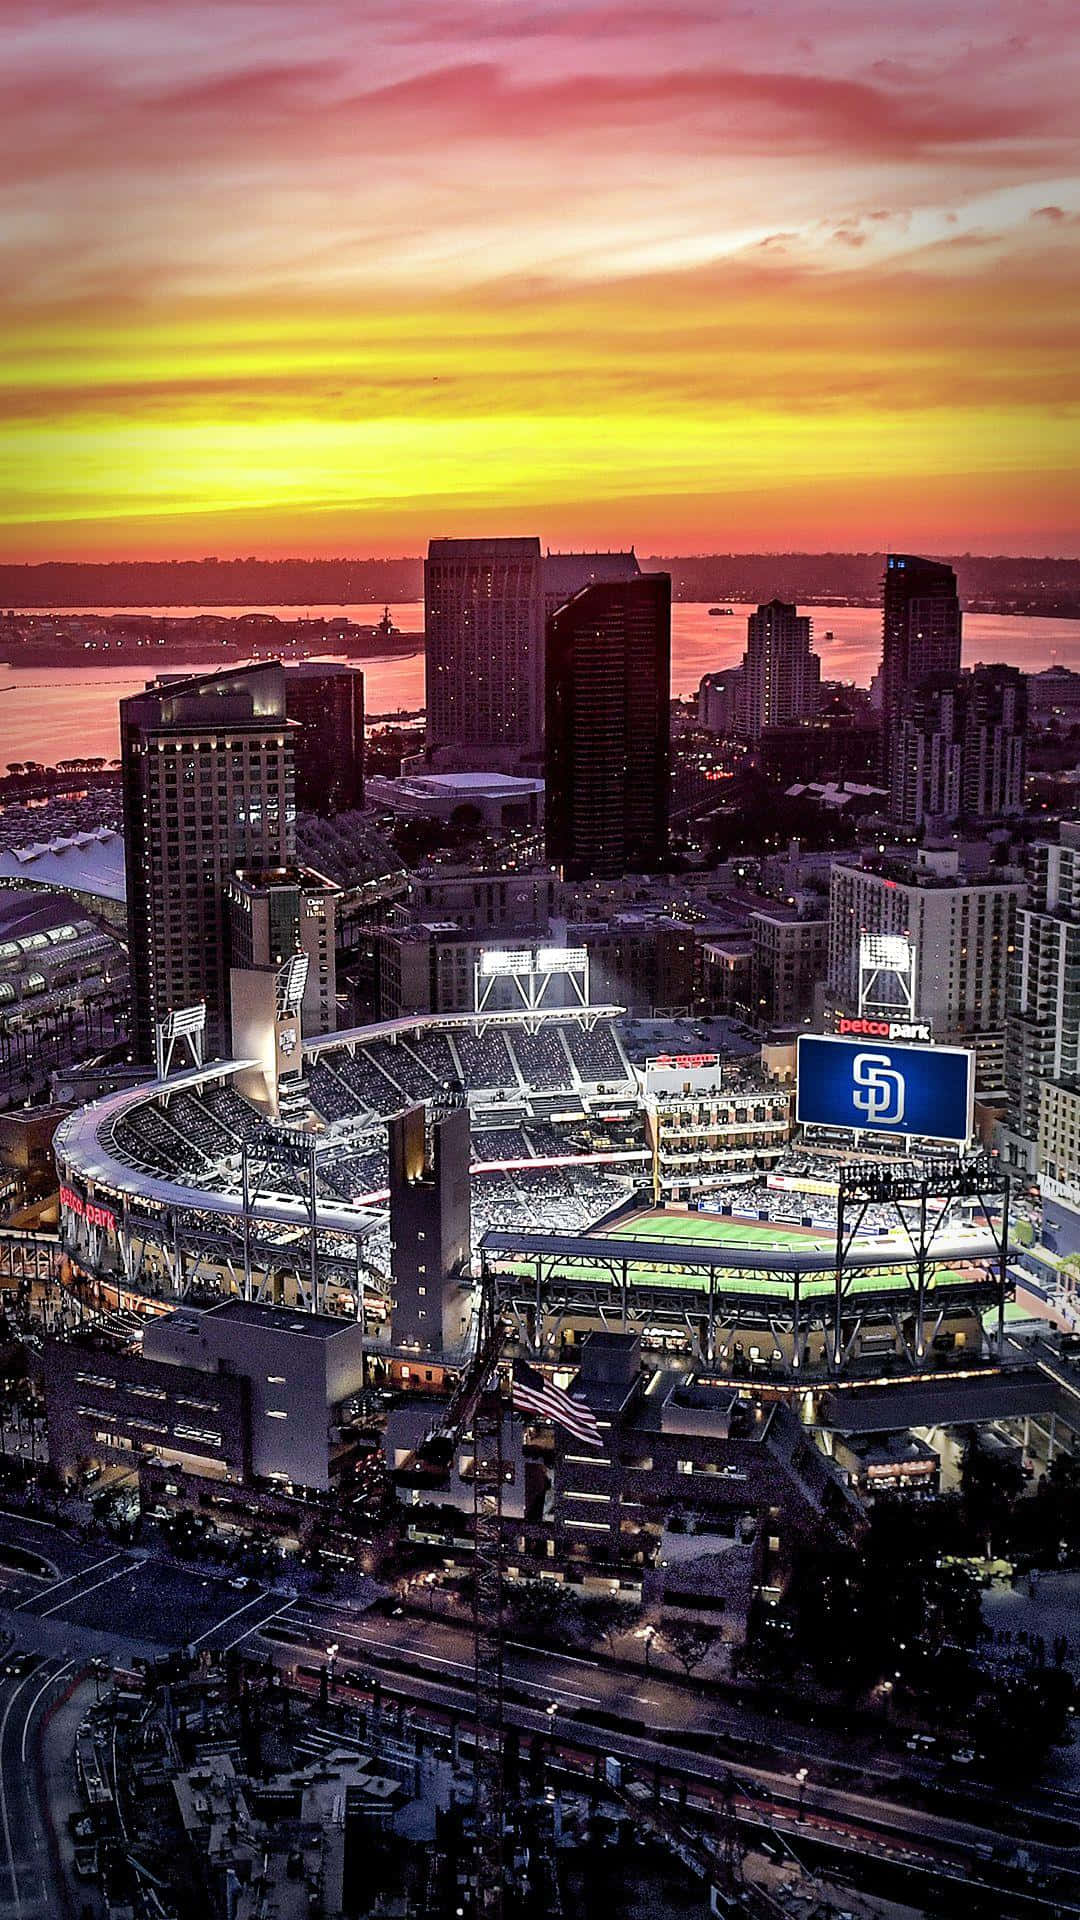 Baseball Stadium In San Diego Iphone Wallpaper